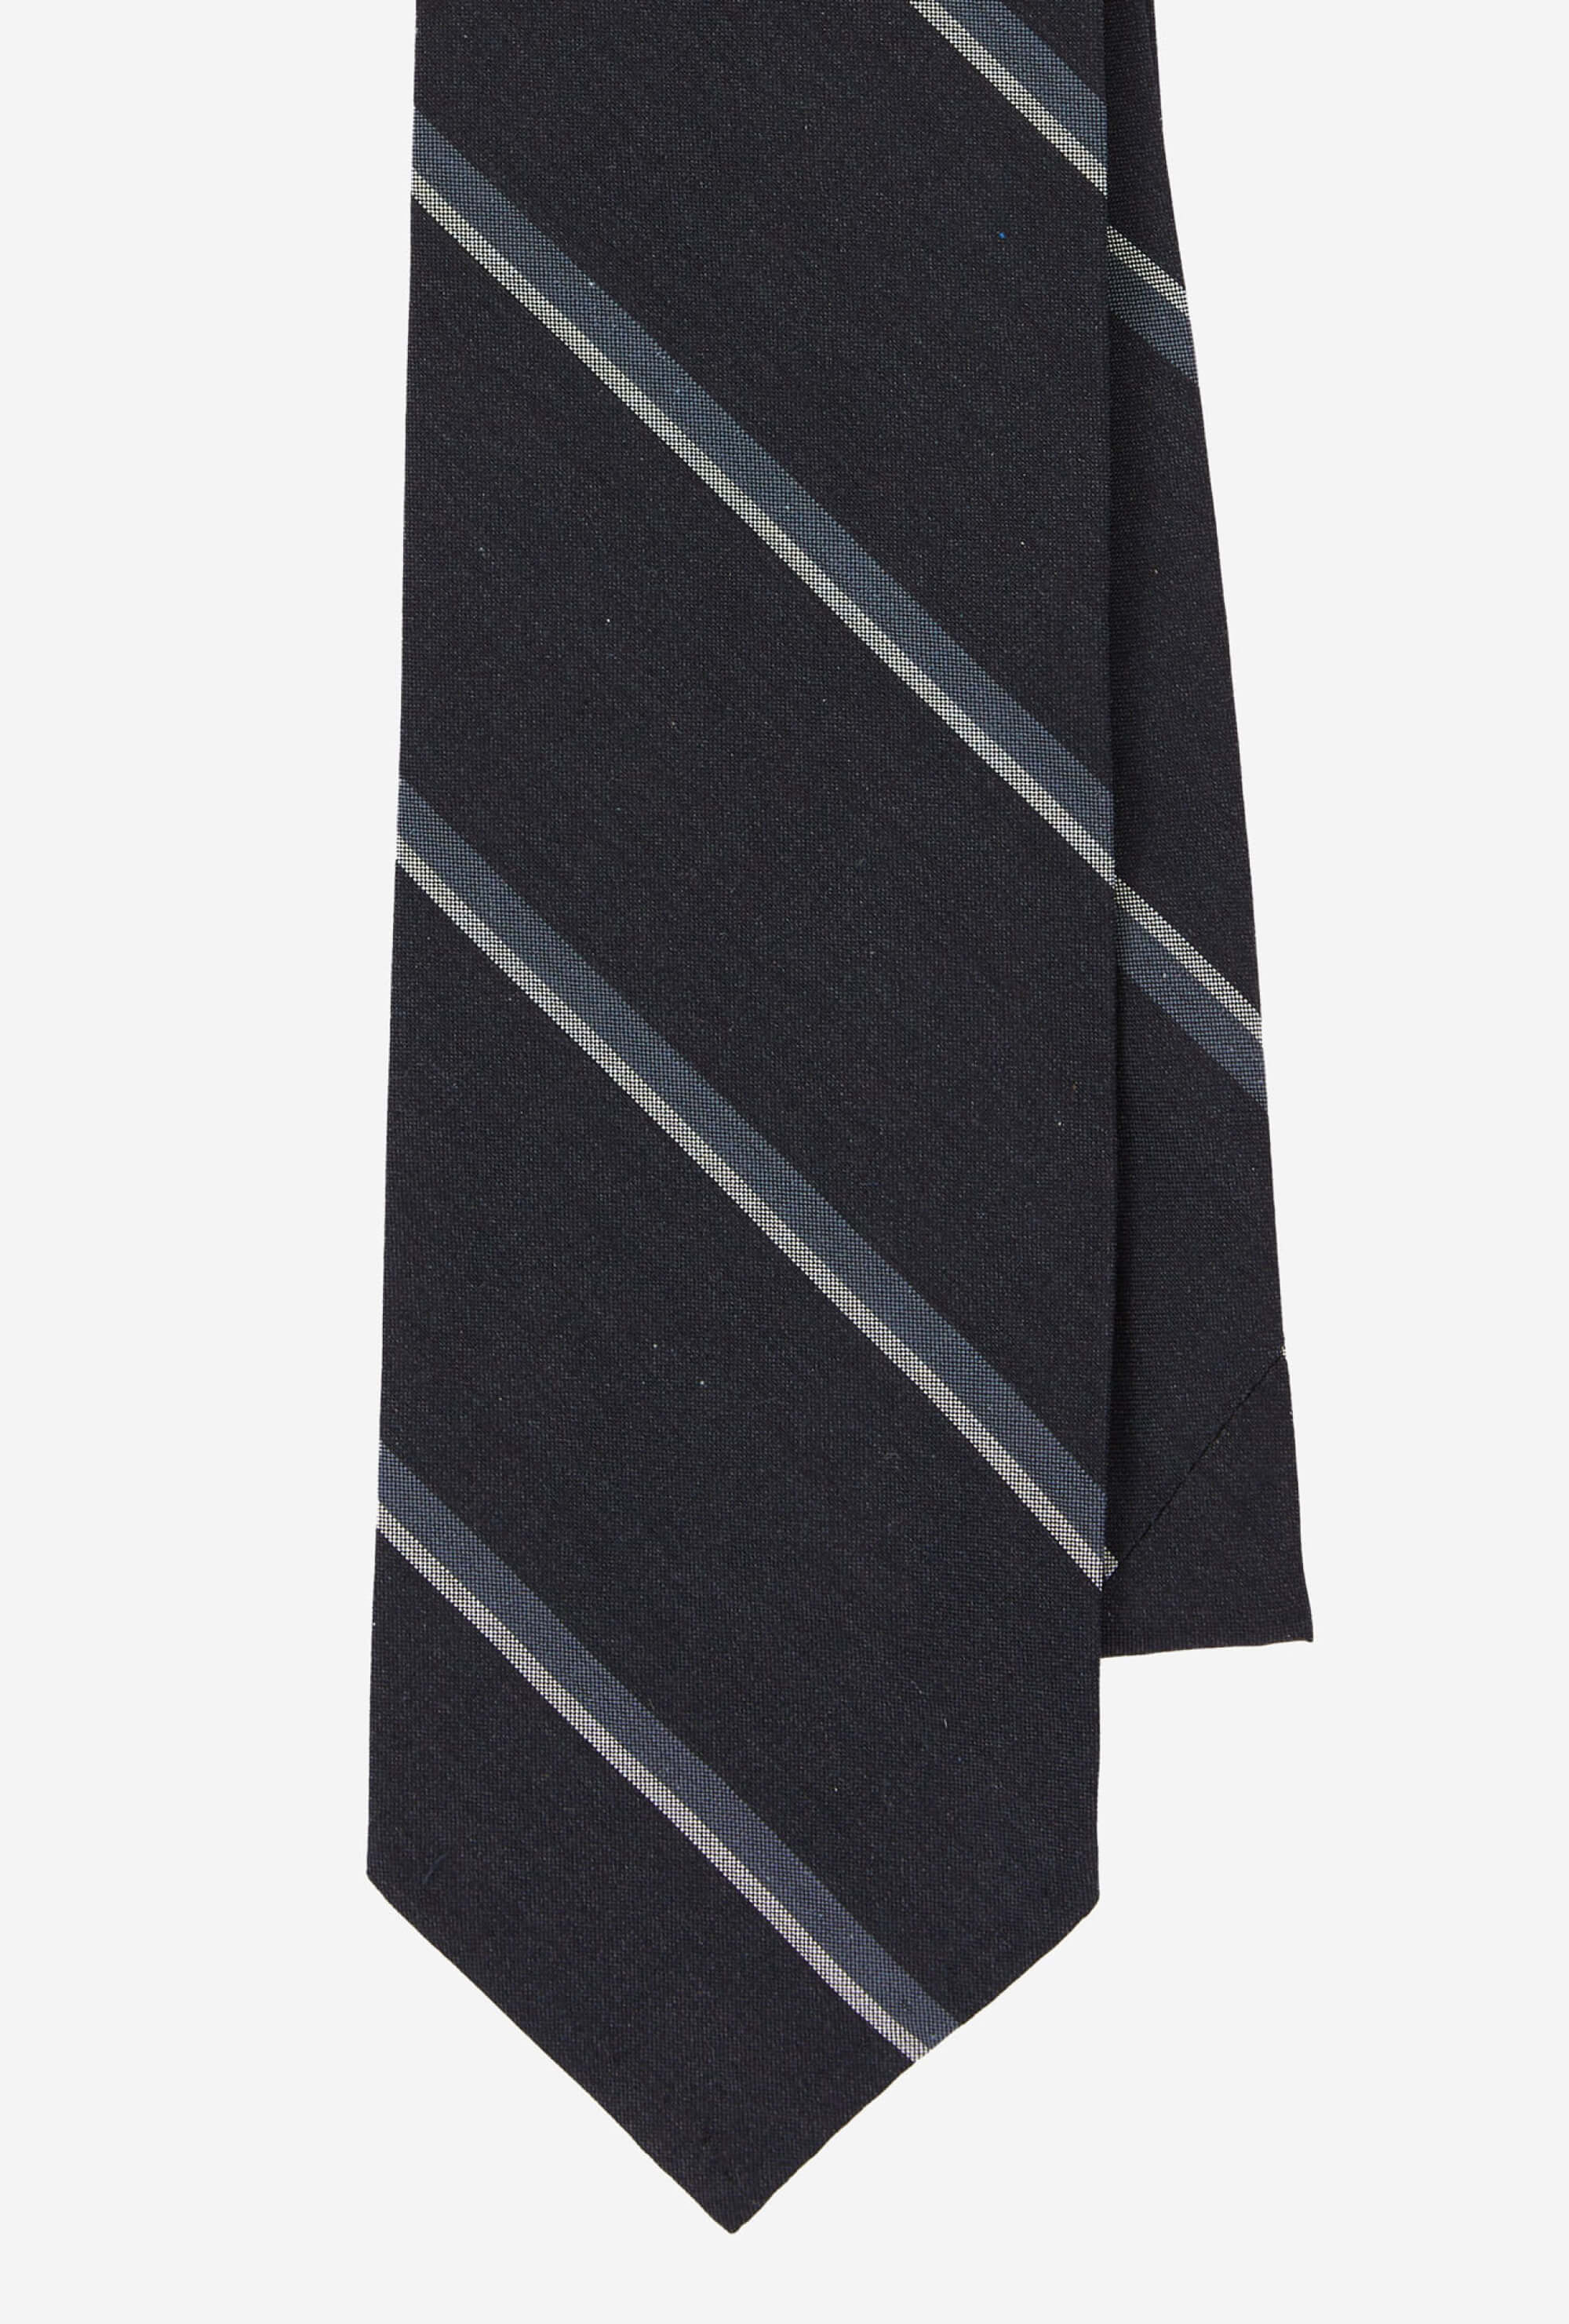 Dry Silk Tie Navy Steel Blue Stripe